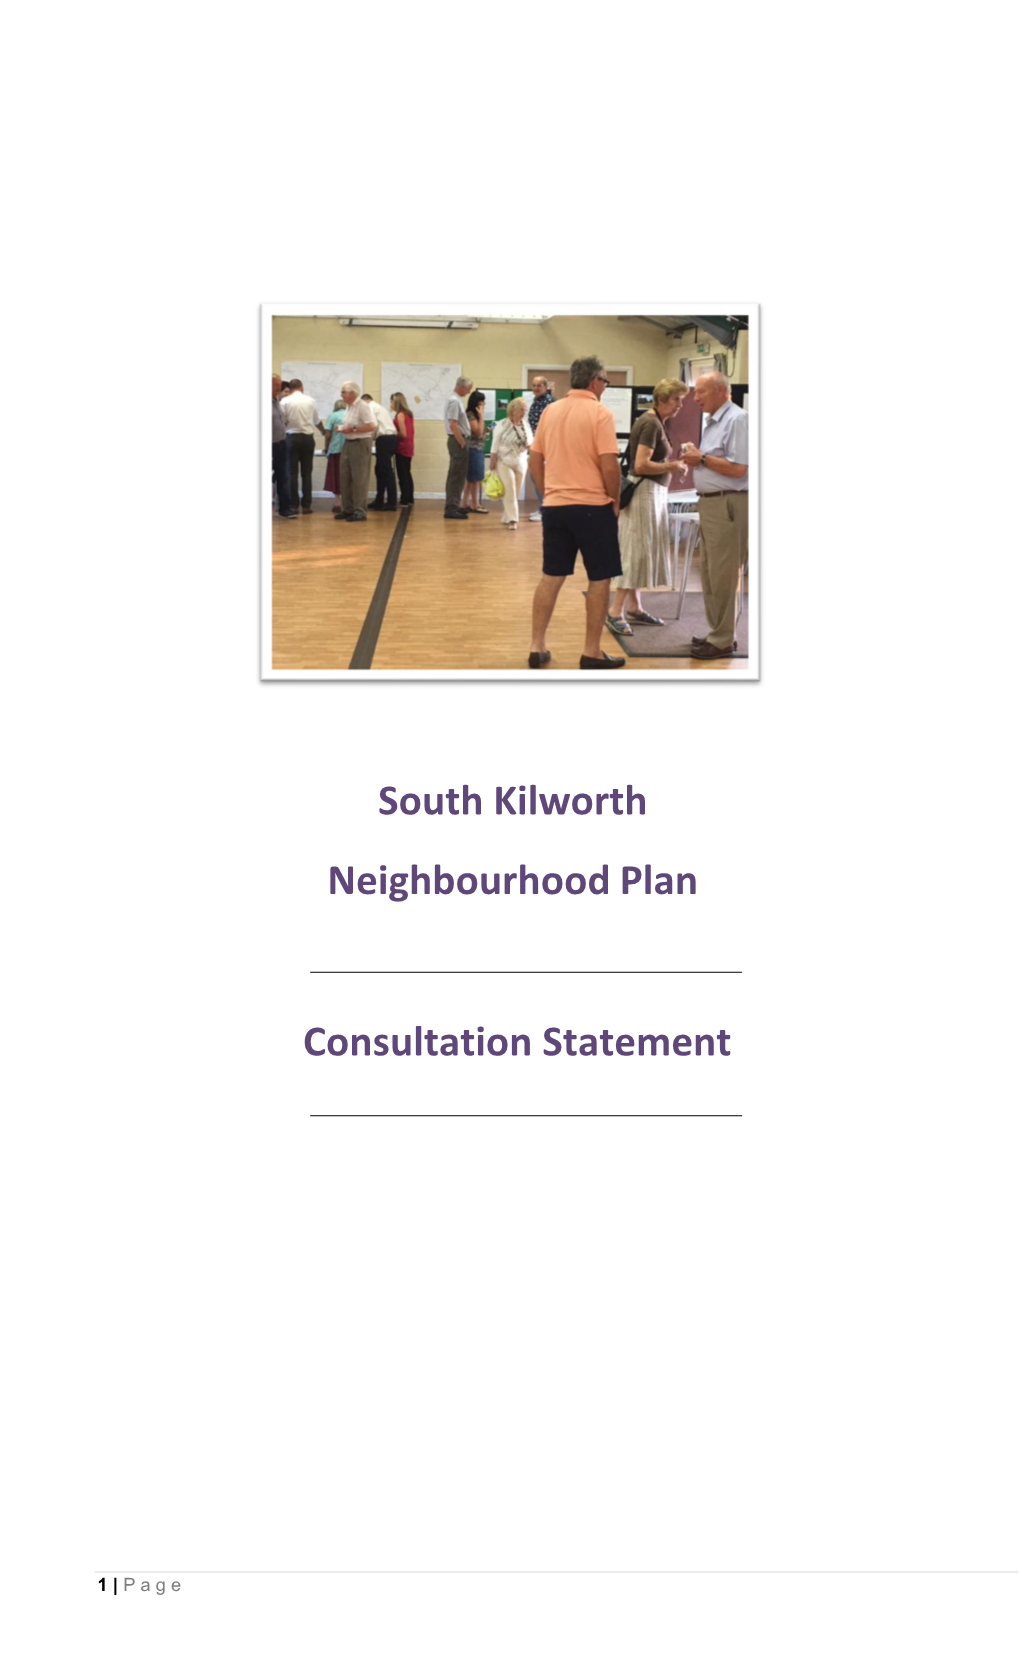 South Kilworth Neighbourhood Plan Consultation Statement